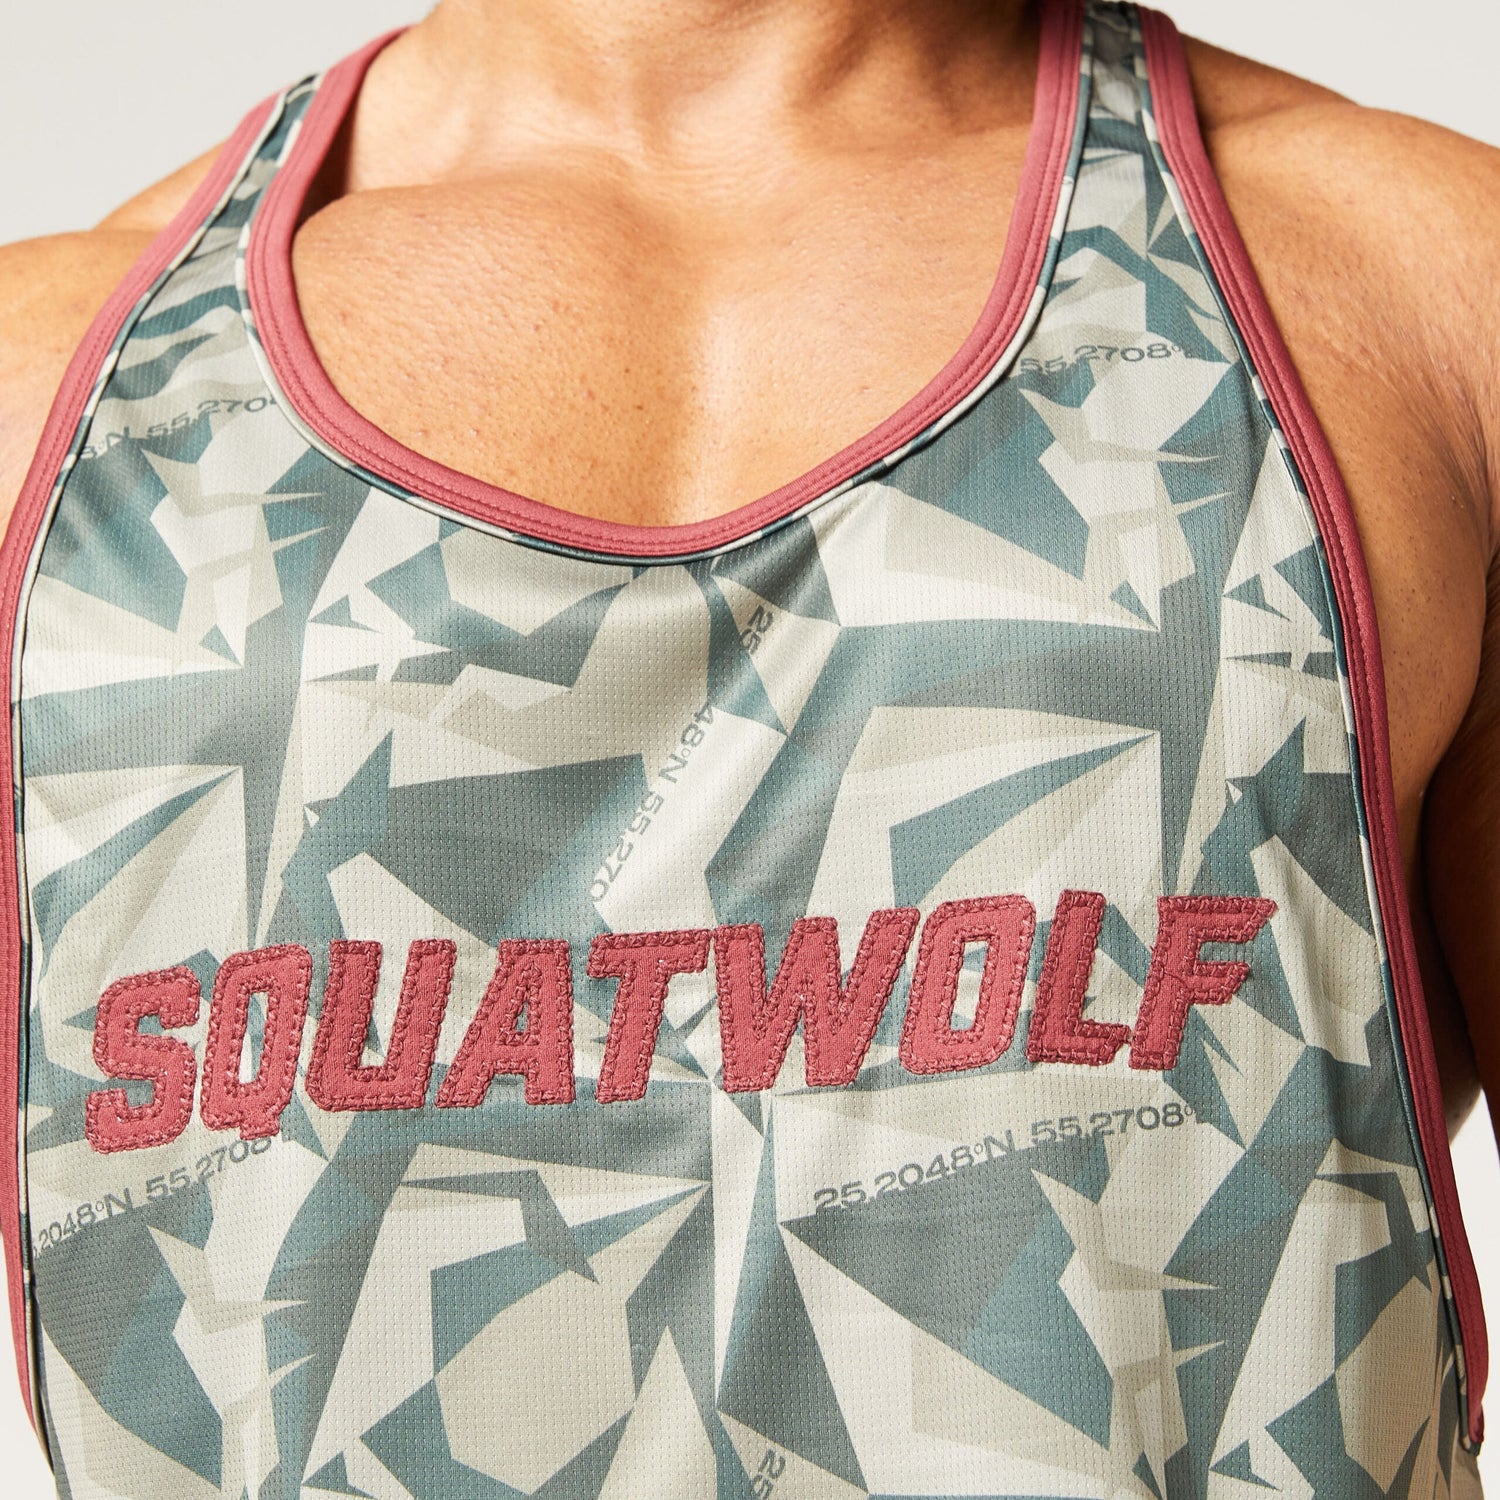 squatwolf-gym-wear-code-camo-tank-green-workout-tank-tops-for-men